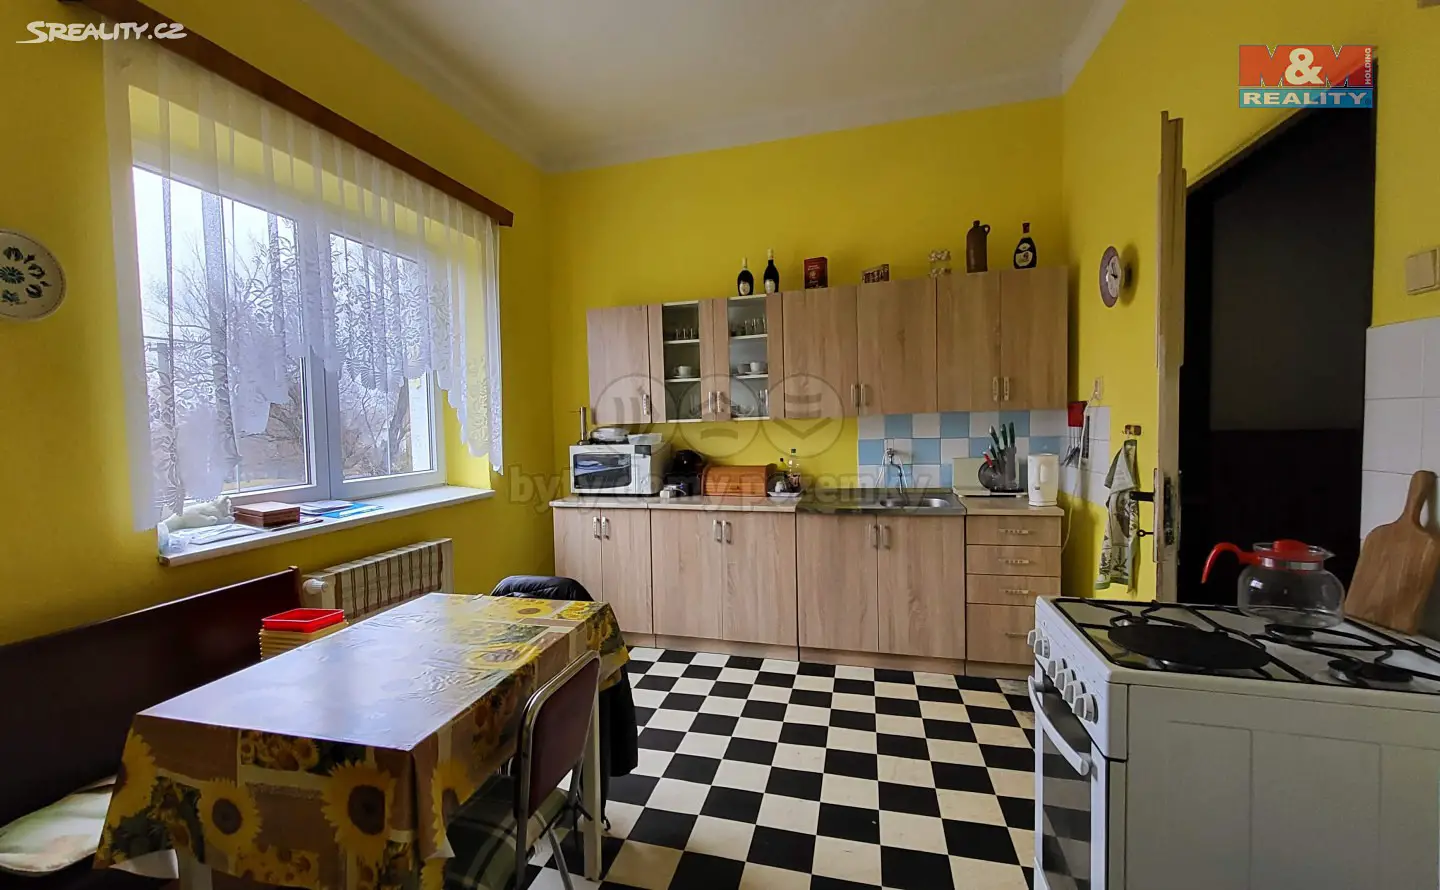 Prodej  rodinného domu 1 149 m², pozemek 339 m², Rudé armády, Obrnice - Chanov